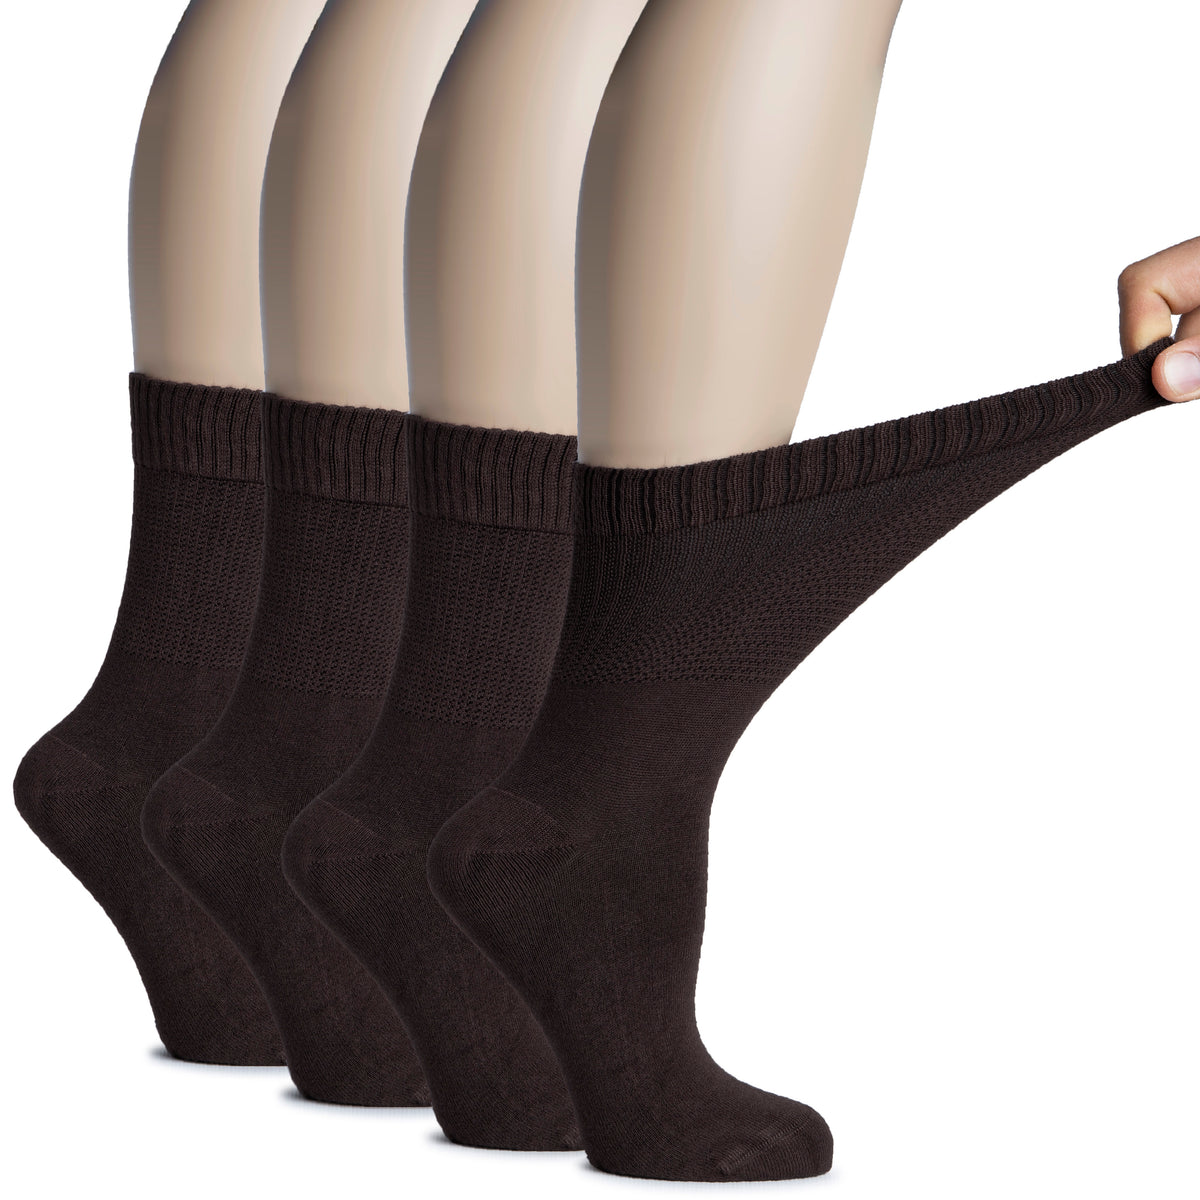 Hugh Ugoli Women's Bamboo Diabetic Crew Thin Socks With Seamless Toe, Soft Socks For Pregnant Women & Elderly People, 4 Pairs | Shoe Size: 6-9 | Charcoal